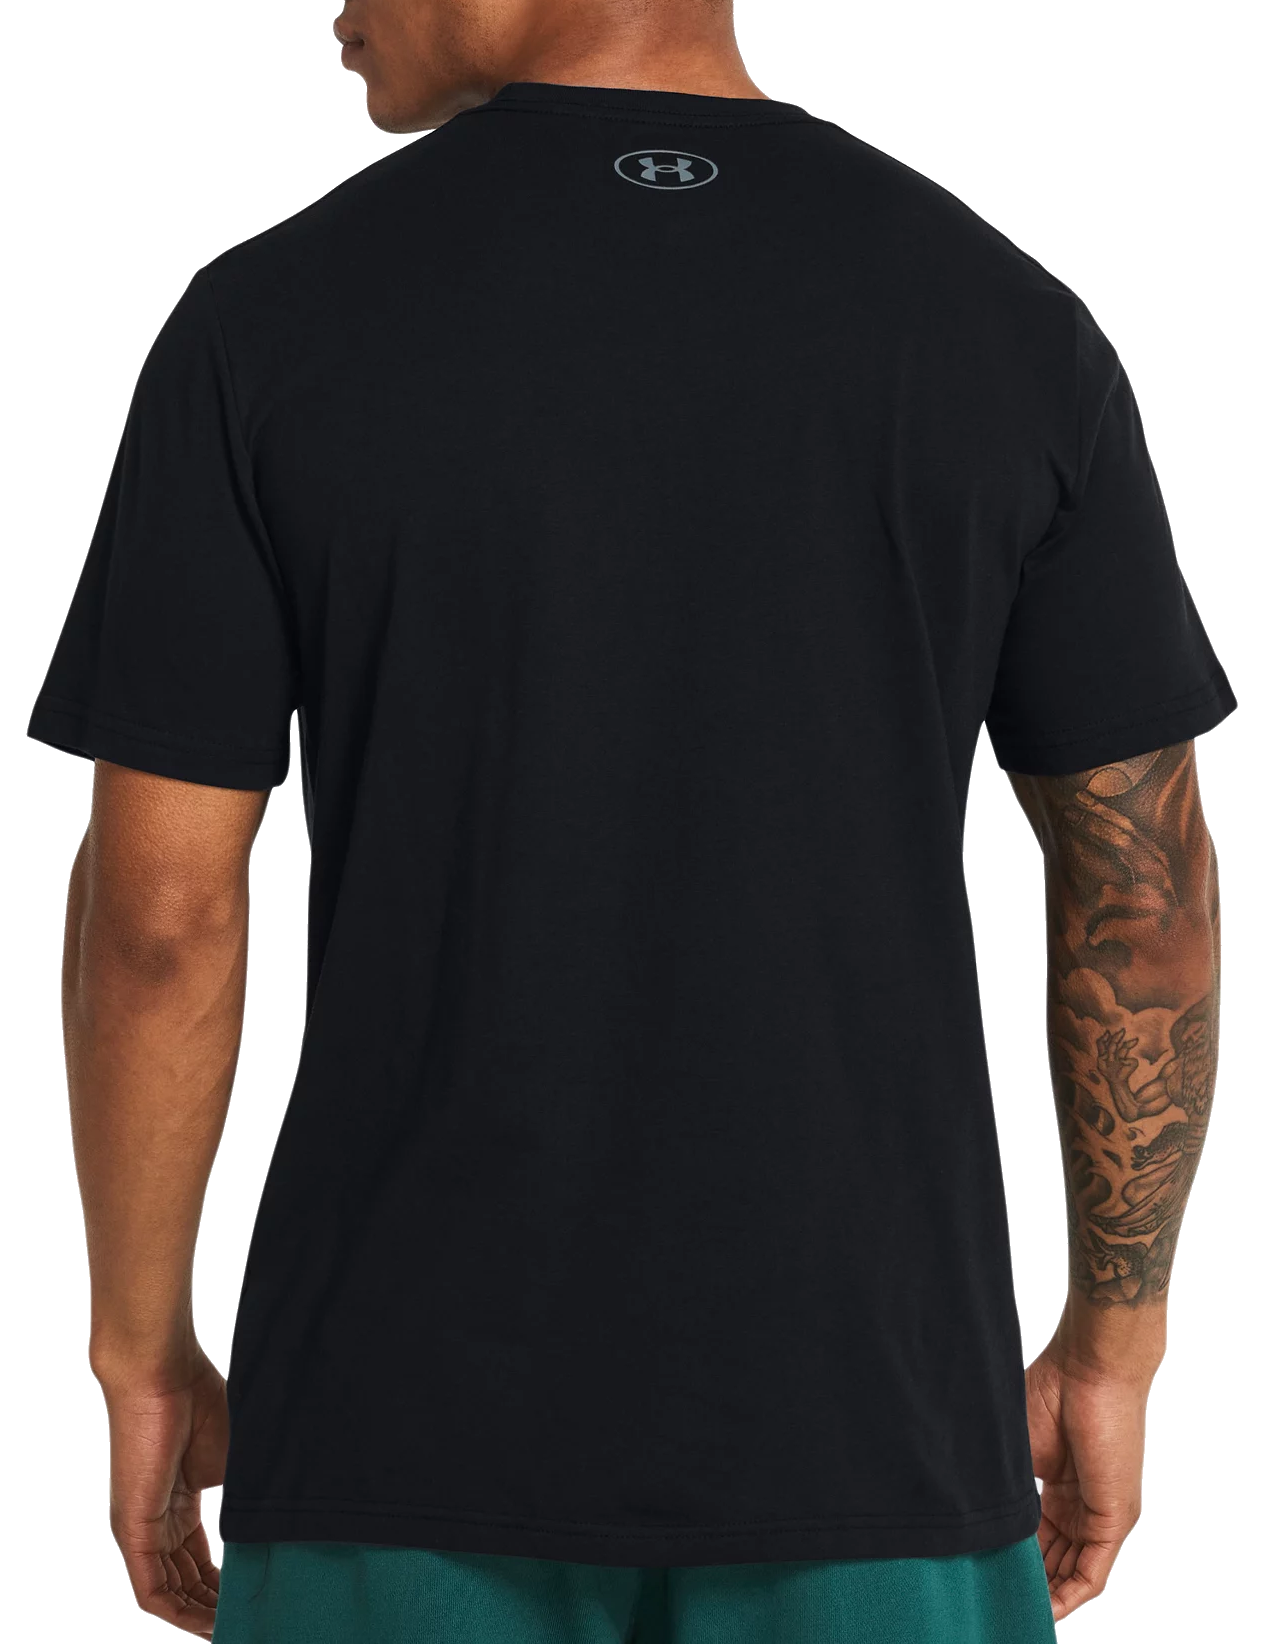 Under Armor Wordmark T-shirt - Black – Footkorner